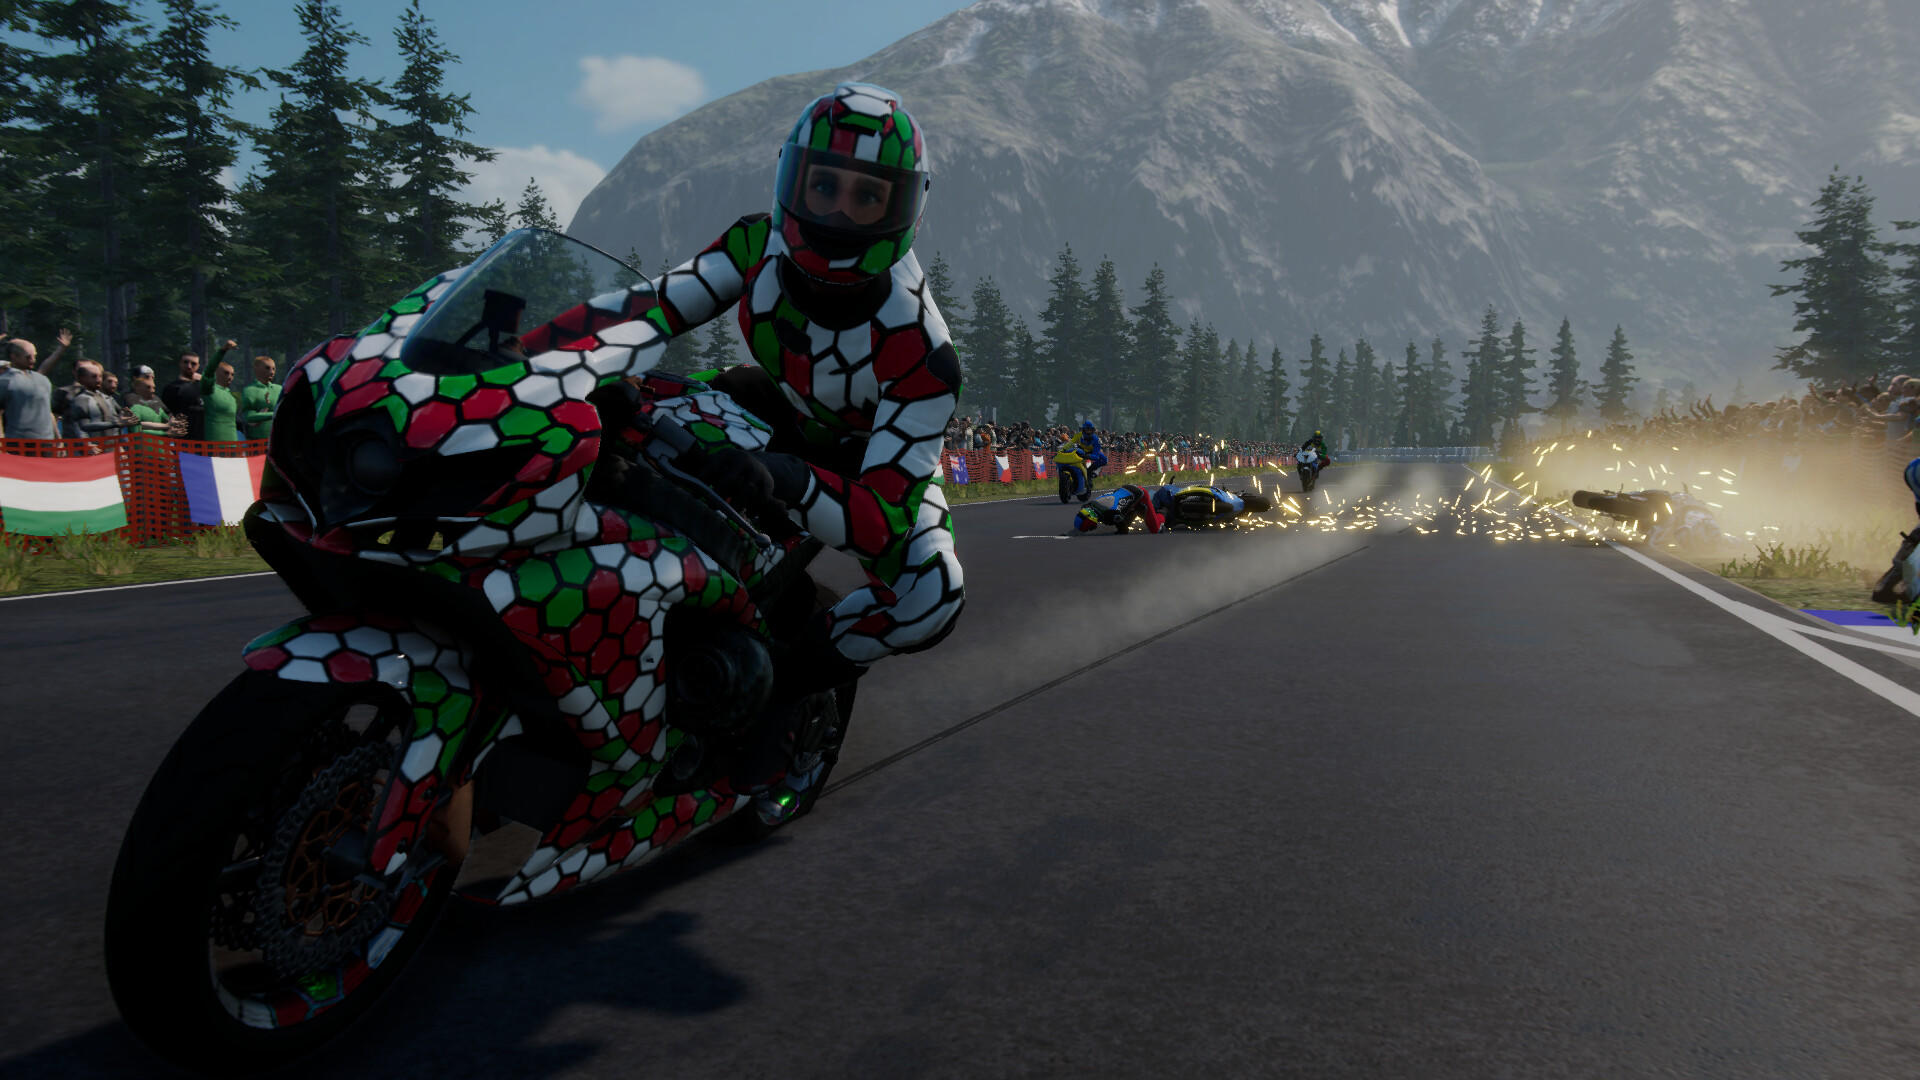 Motorbike Evolution 2024 screenshot game